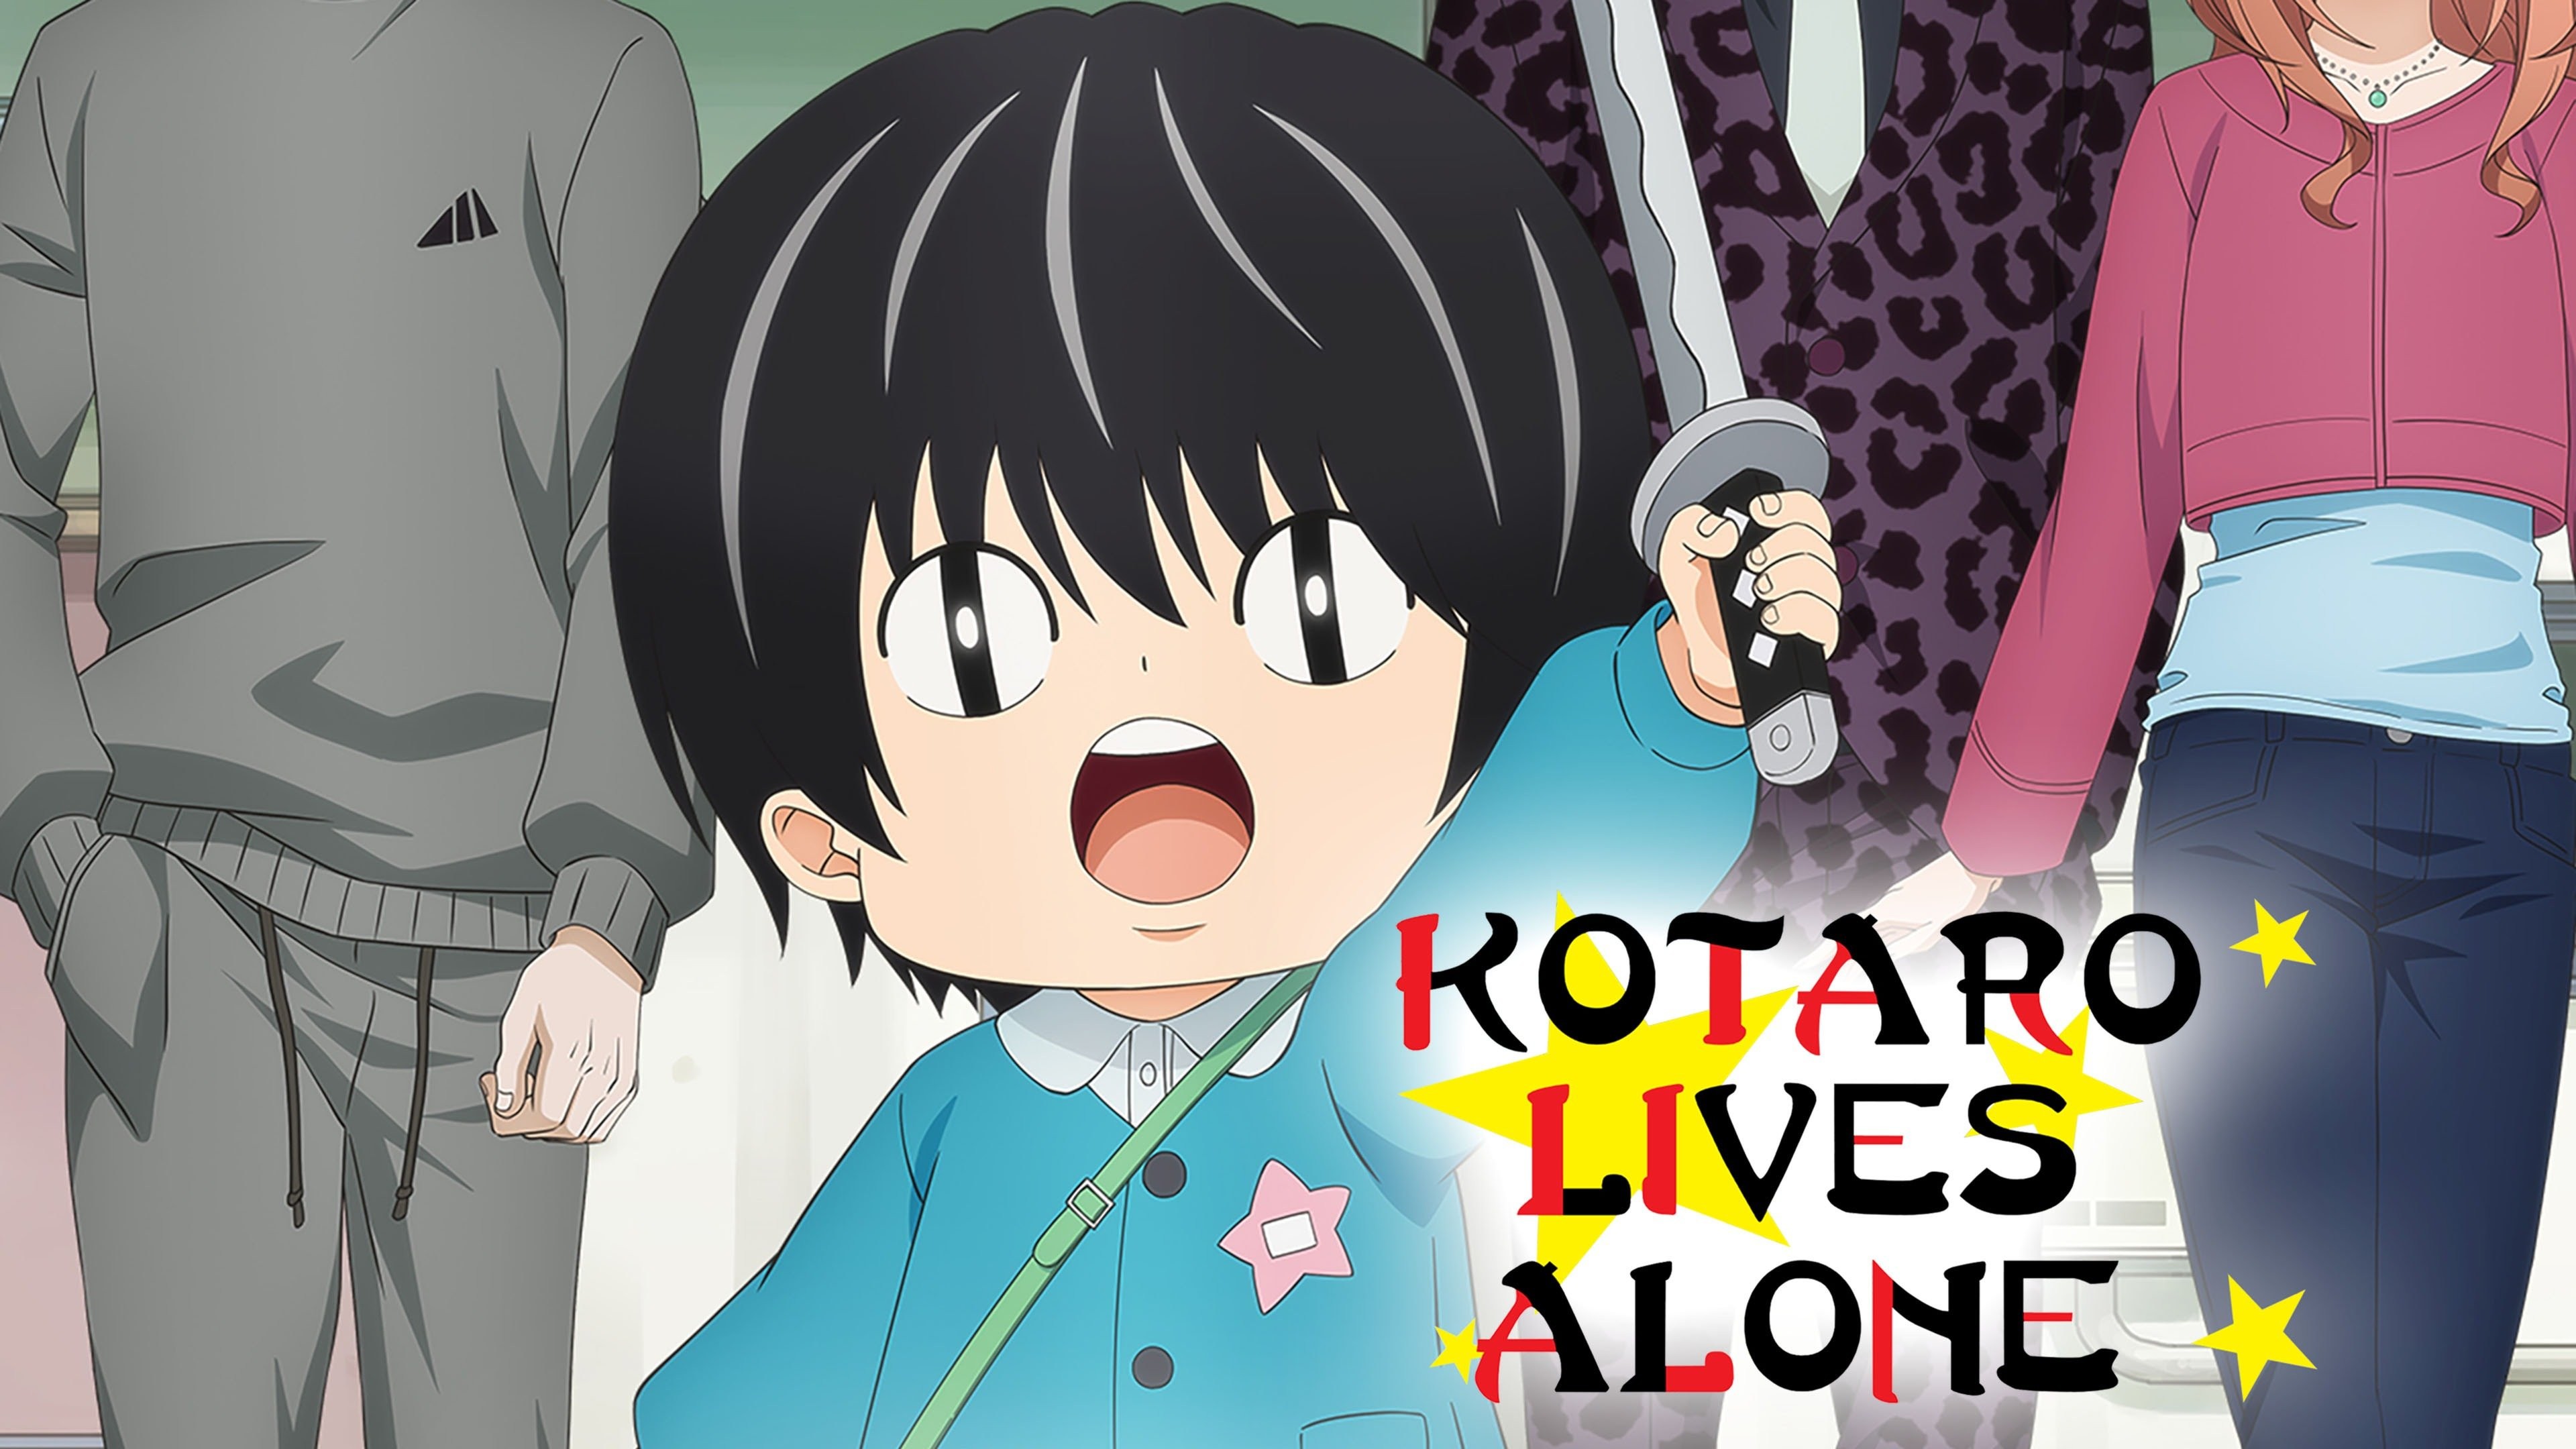 Review: 'Kotaro Lives Alone' on Netflix